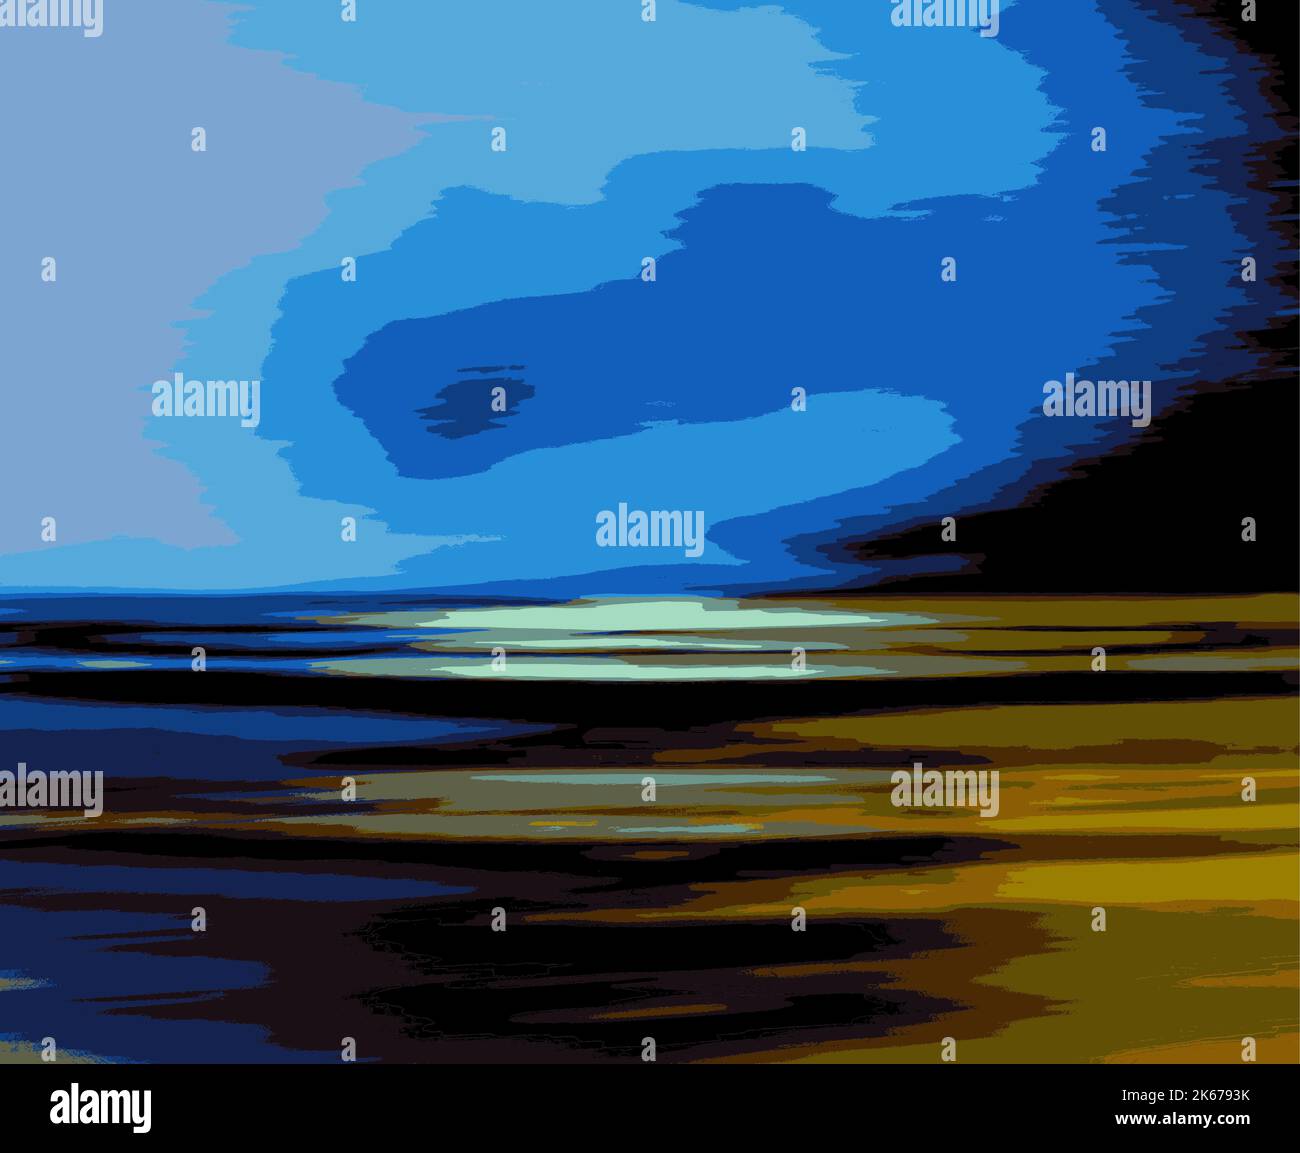 Abstrakte Landschaftskunst Illustration mit Strand, Himmelswolken und Ozeanvektor - Blaue Farben Stock Vektor